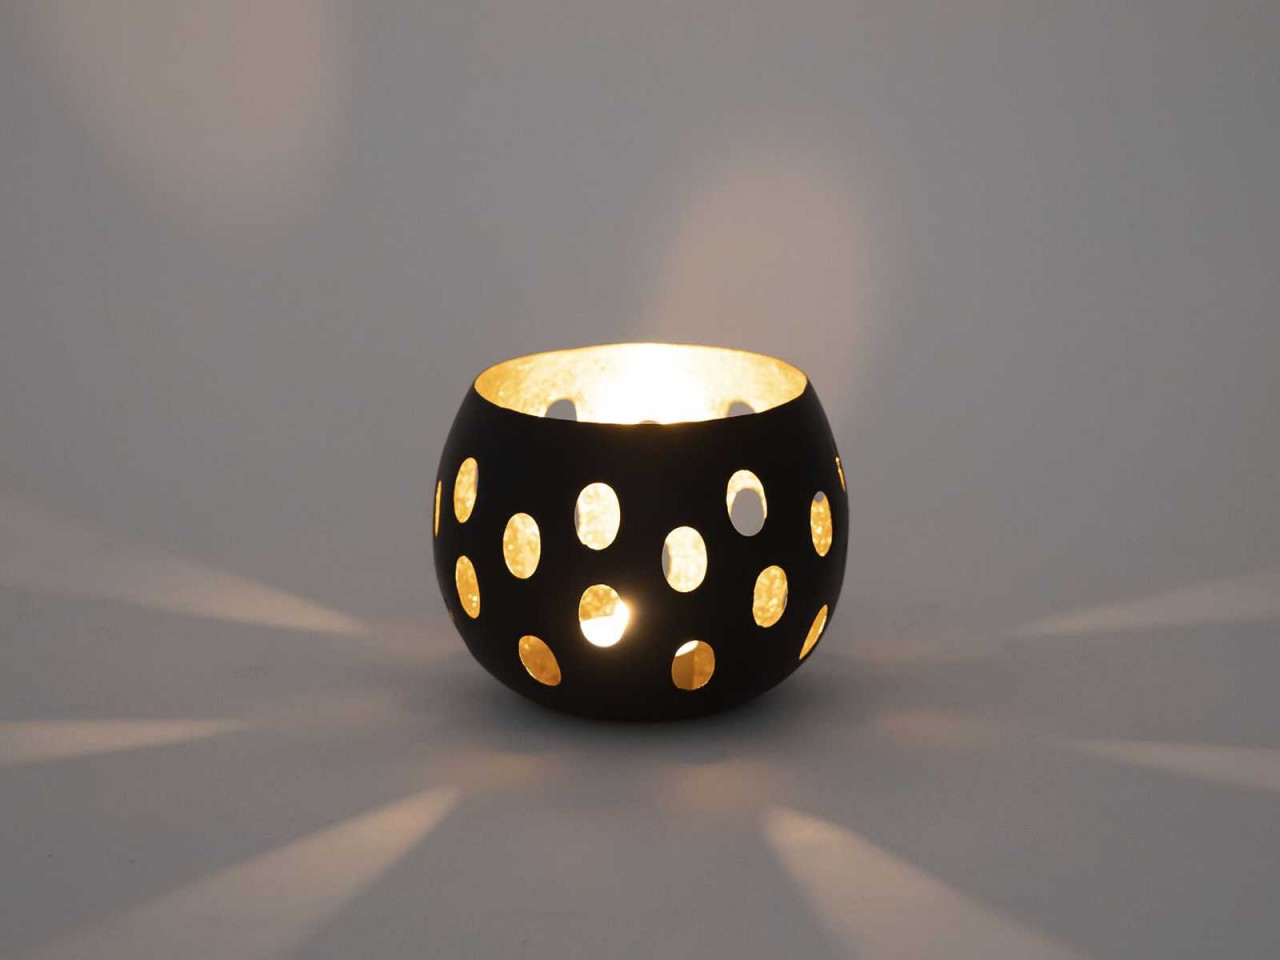 Kerzenhalter Set 2-teilig Teelichthalter Florina Kugelform schwarz matt innen vergoldet